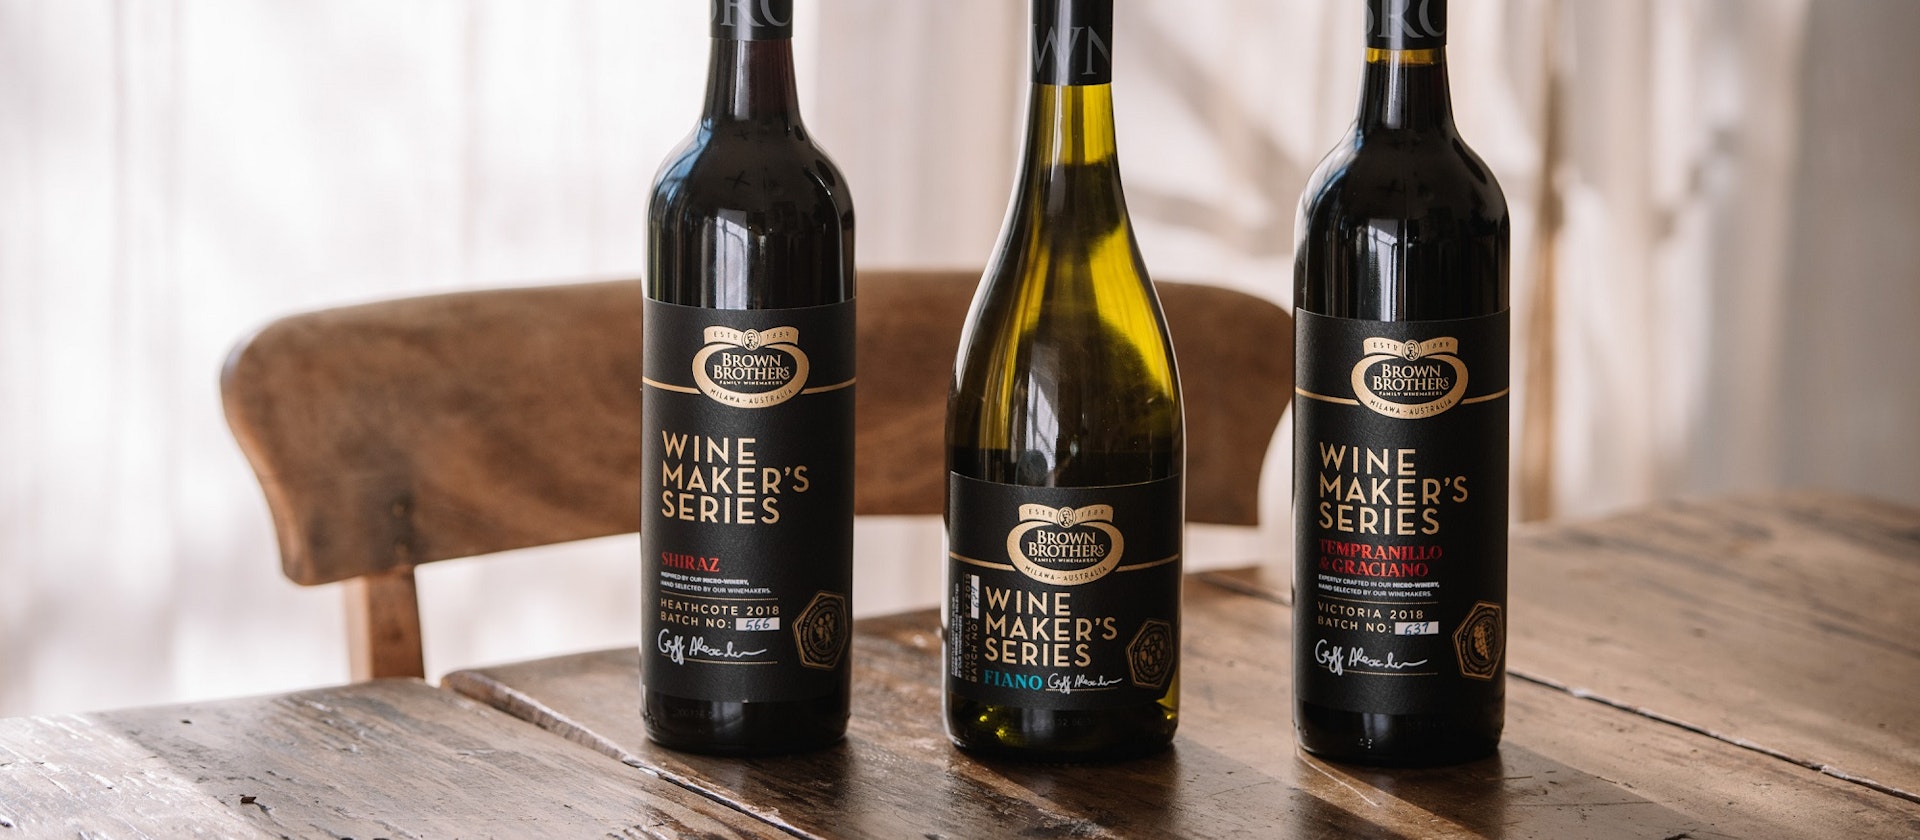 Winemaker's series range of wine